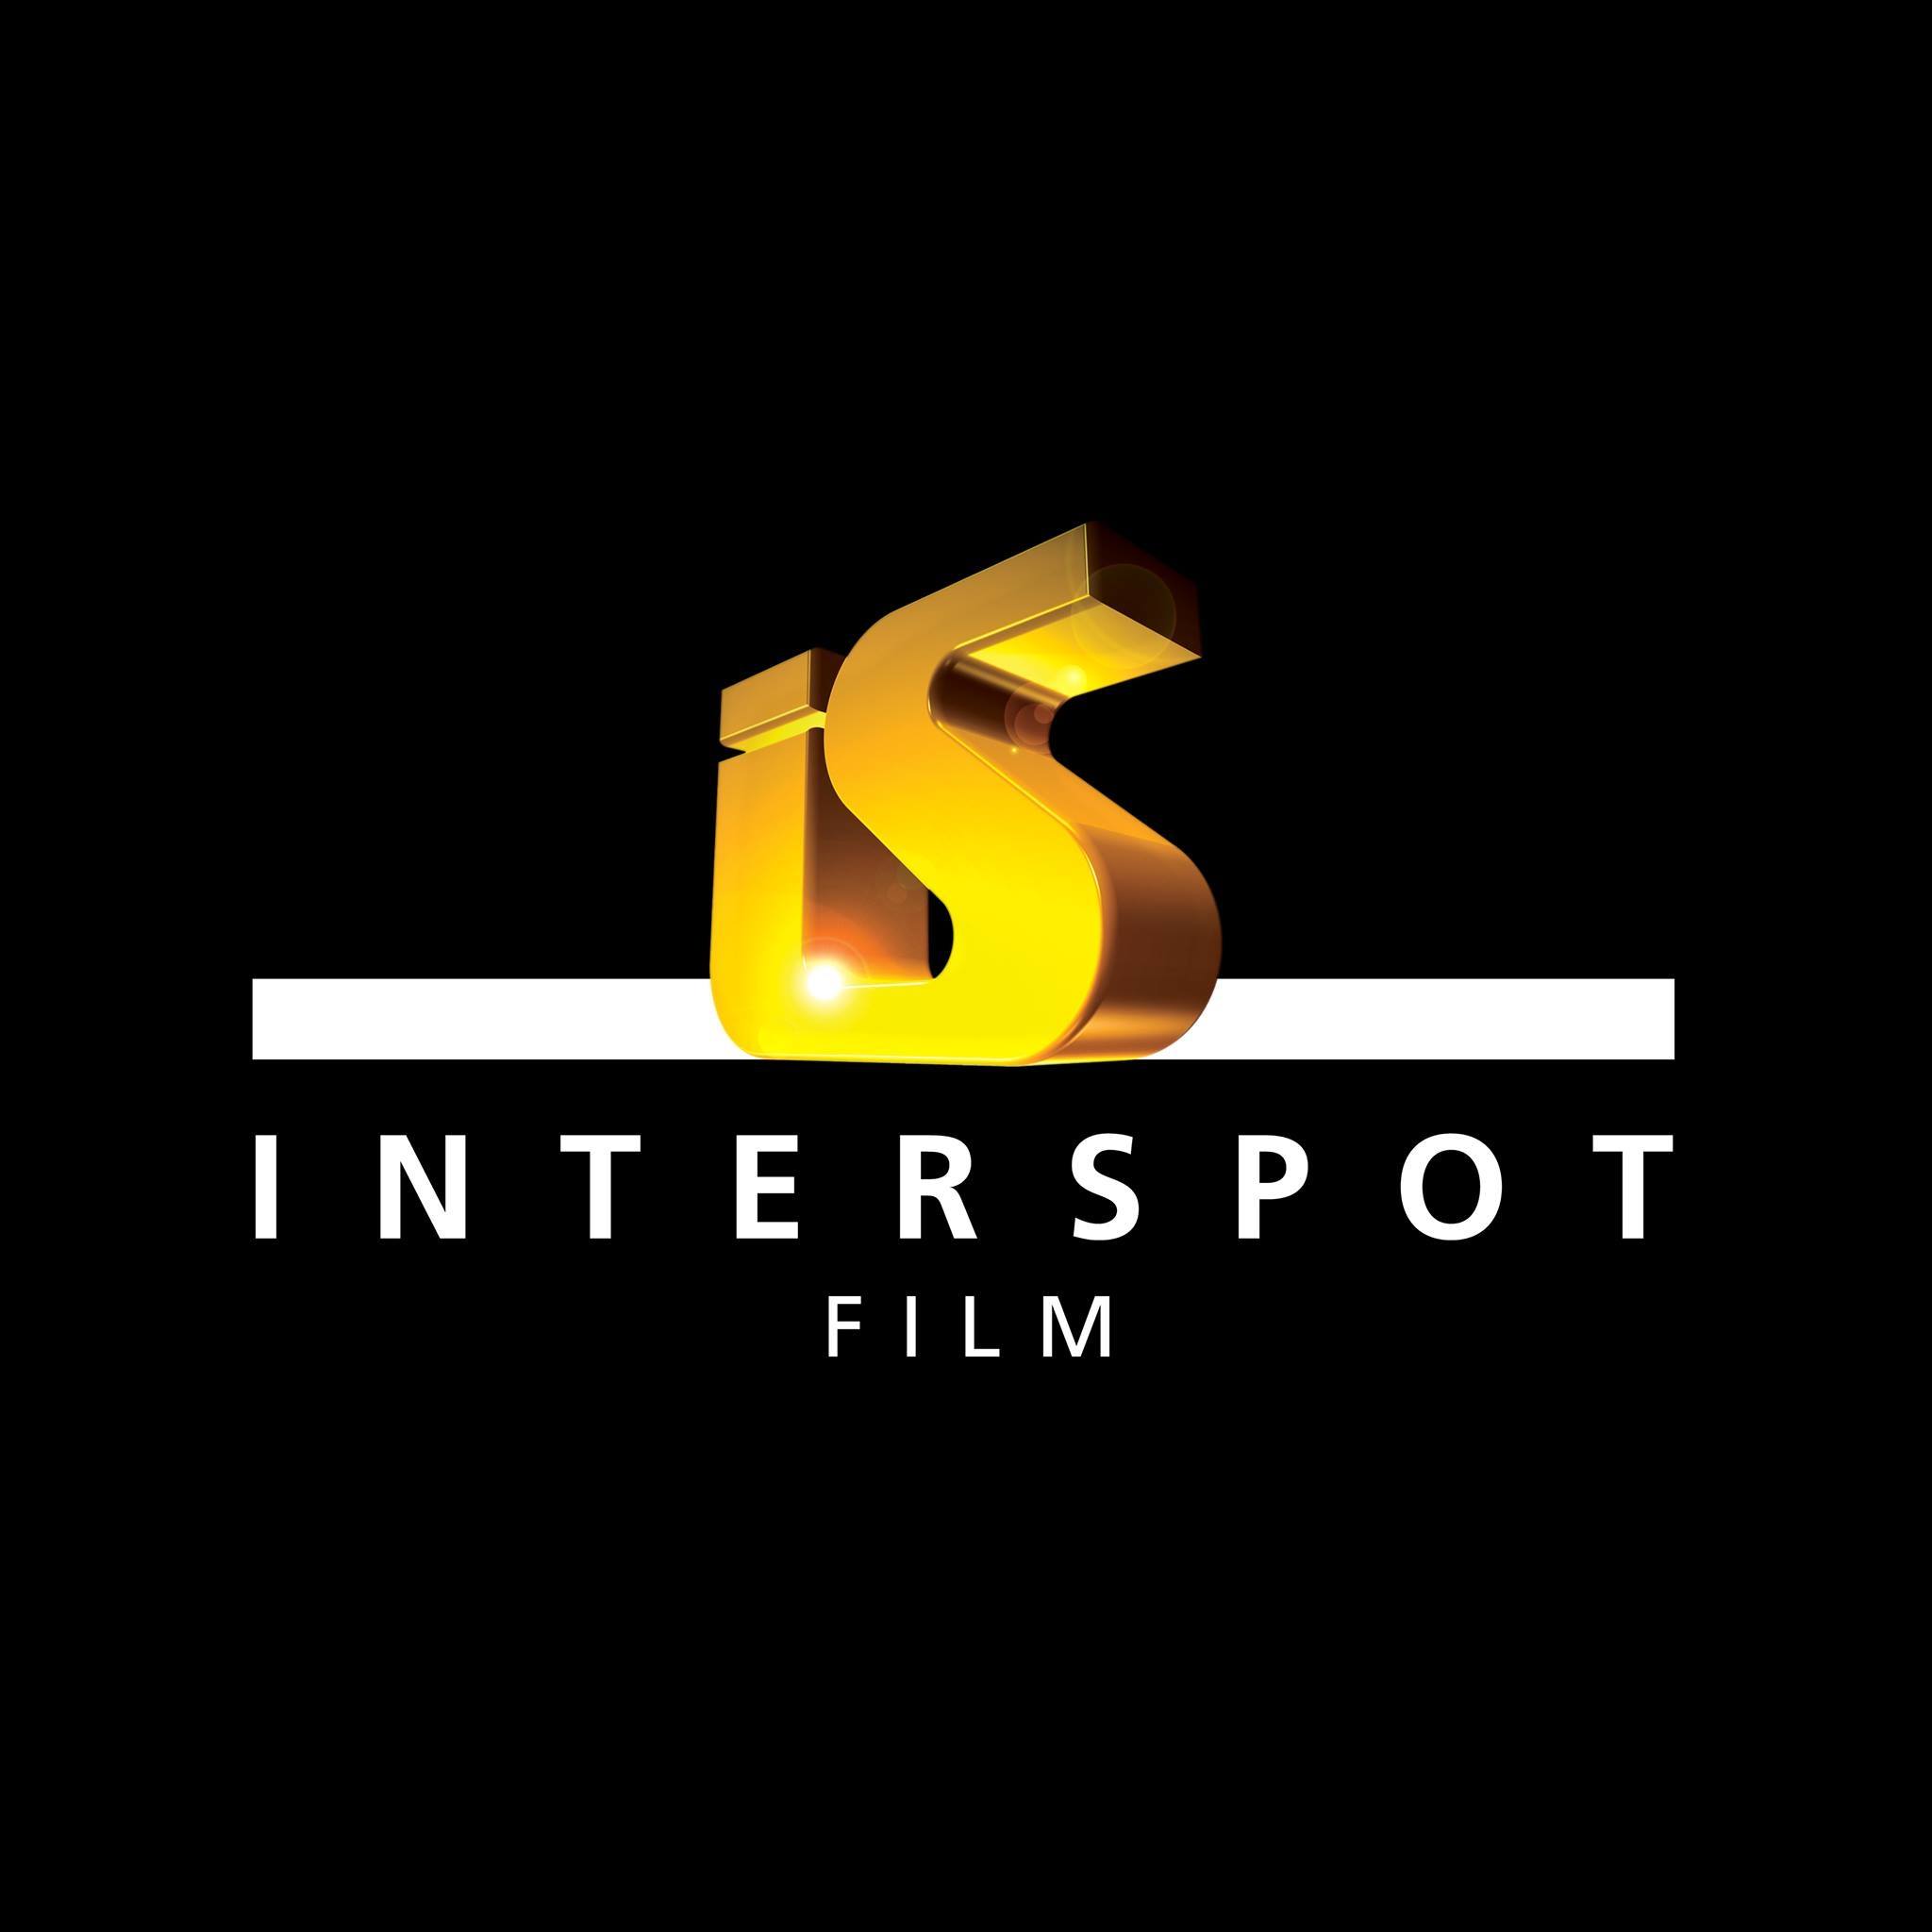 Interspot Film